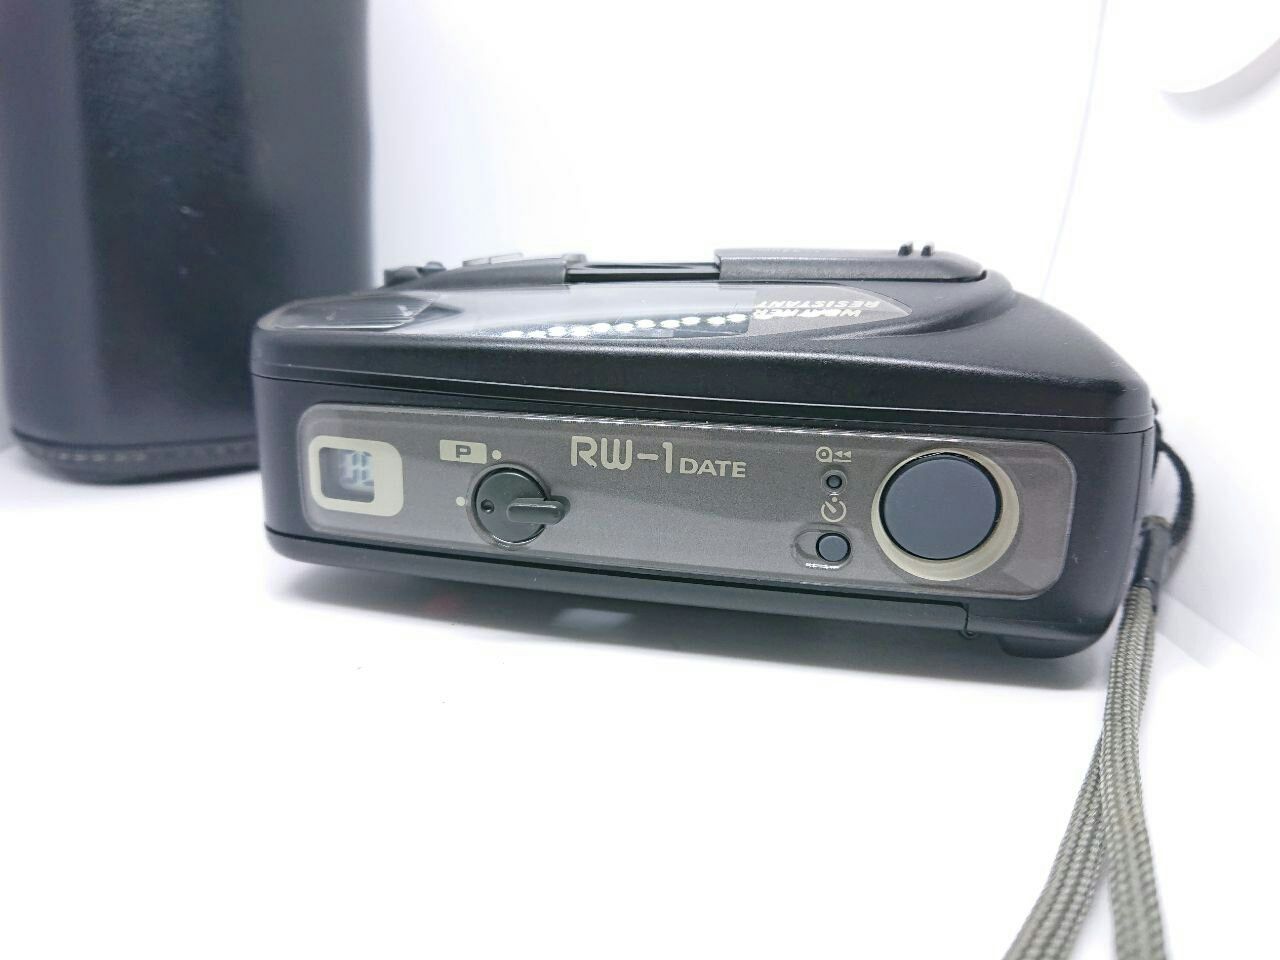 Плёночный фотоаппарат Ricoh RW-1